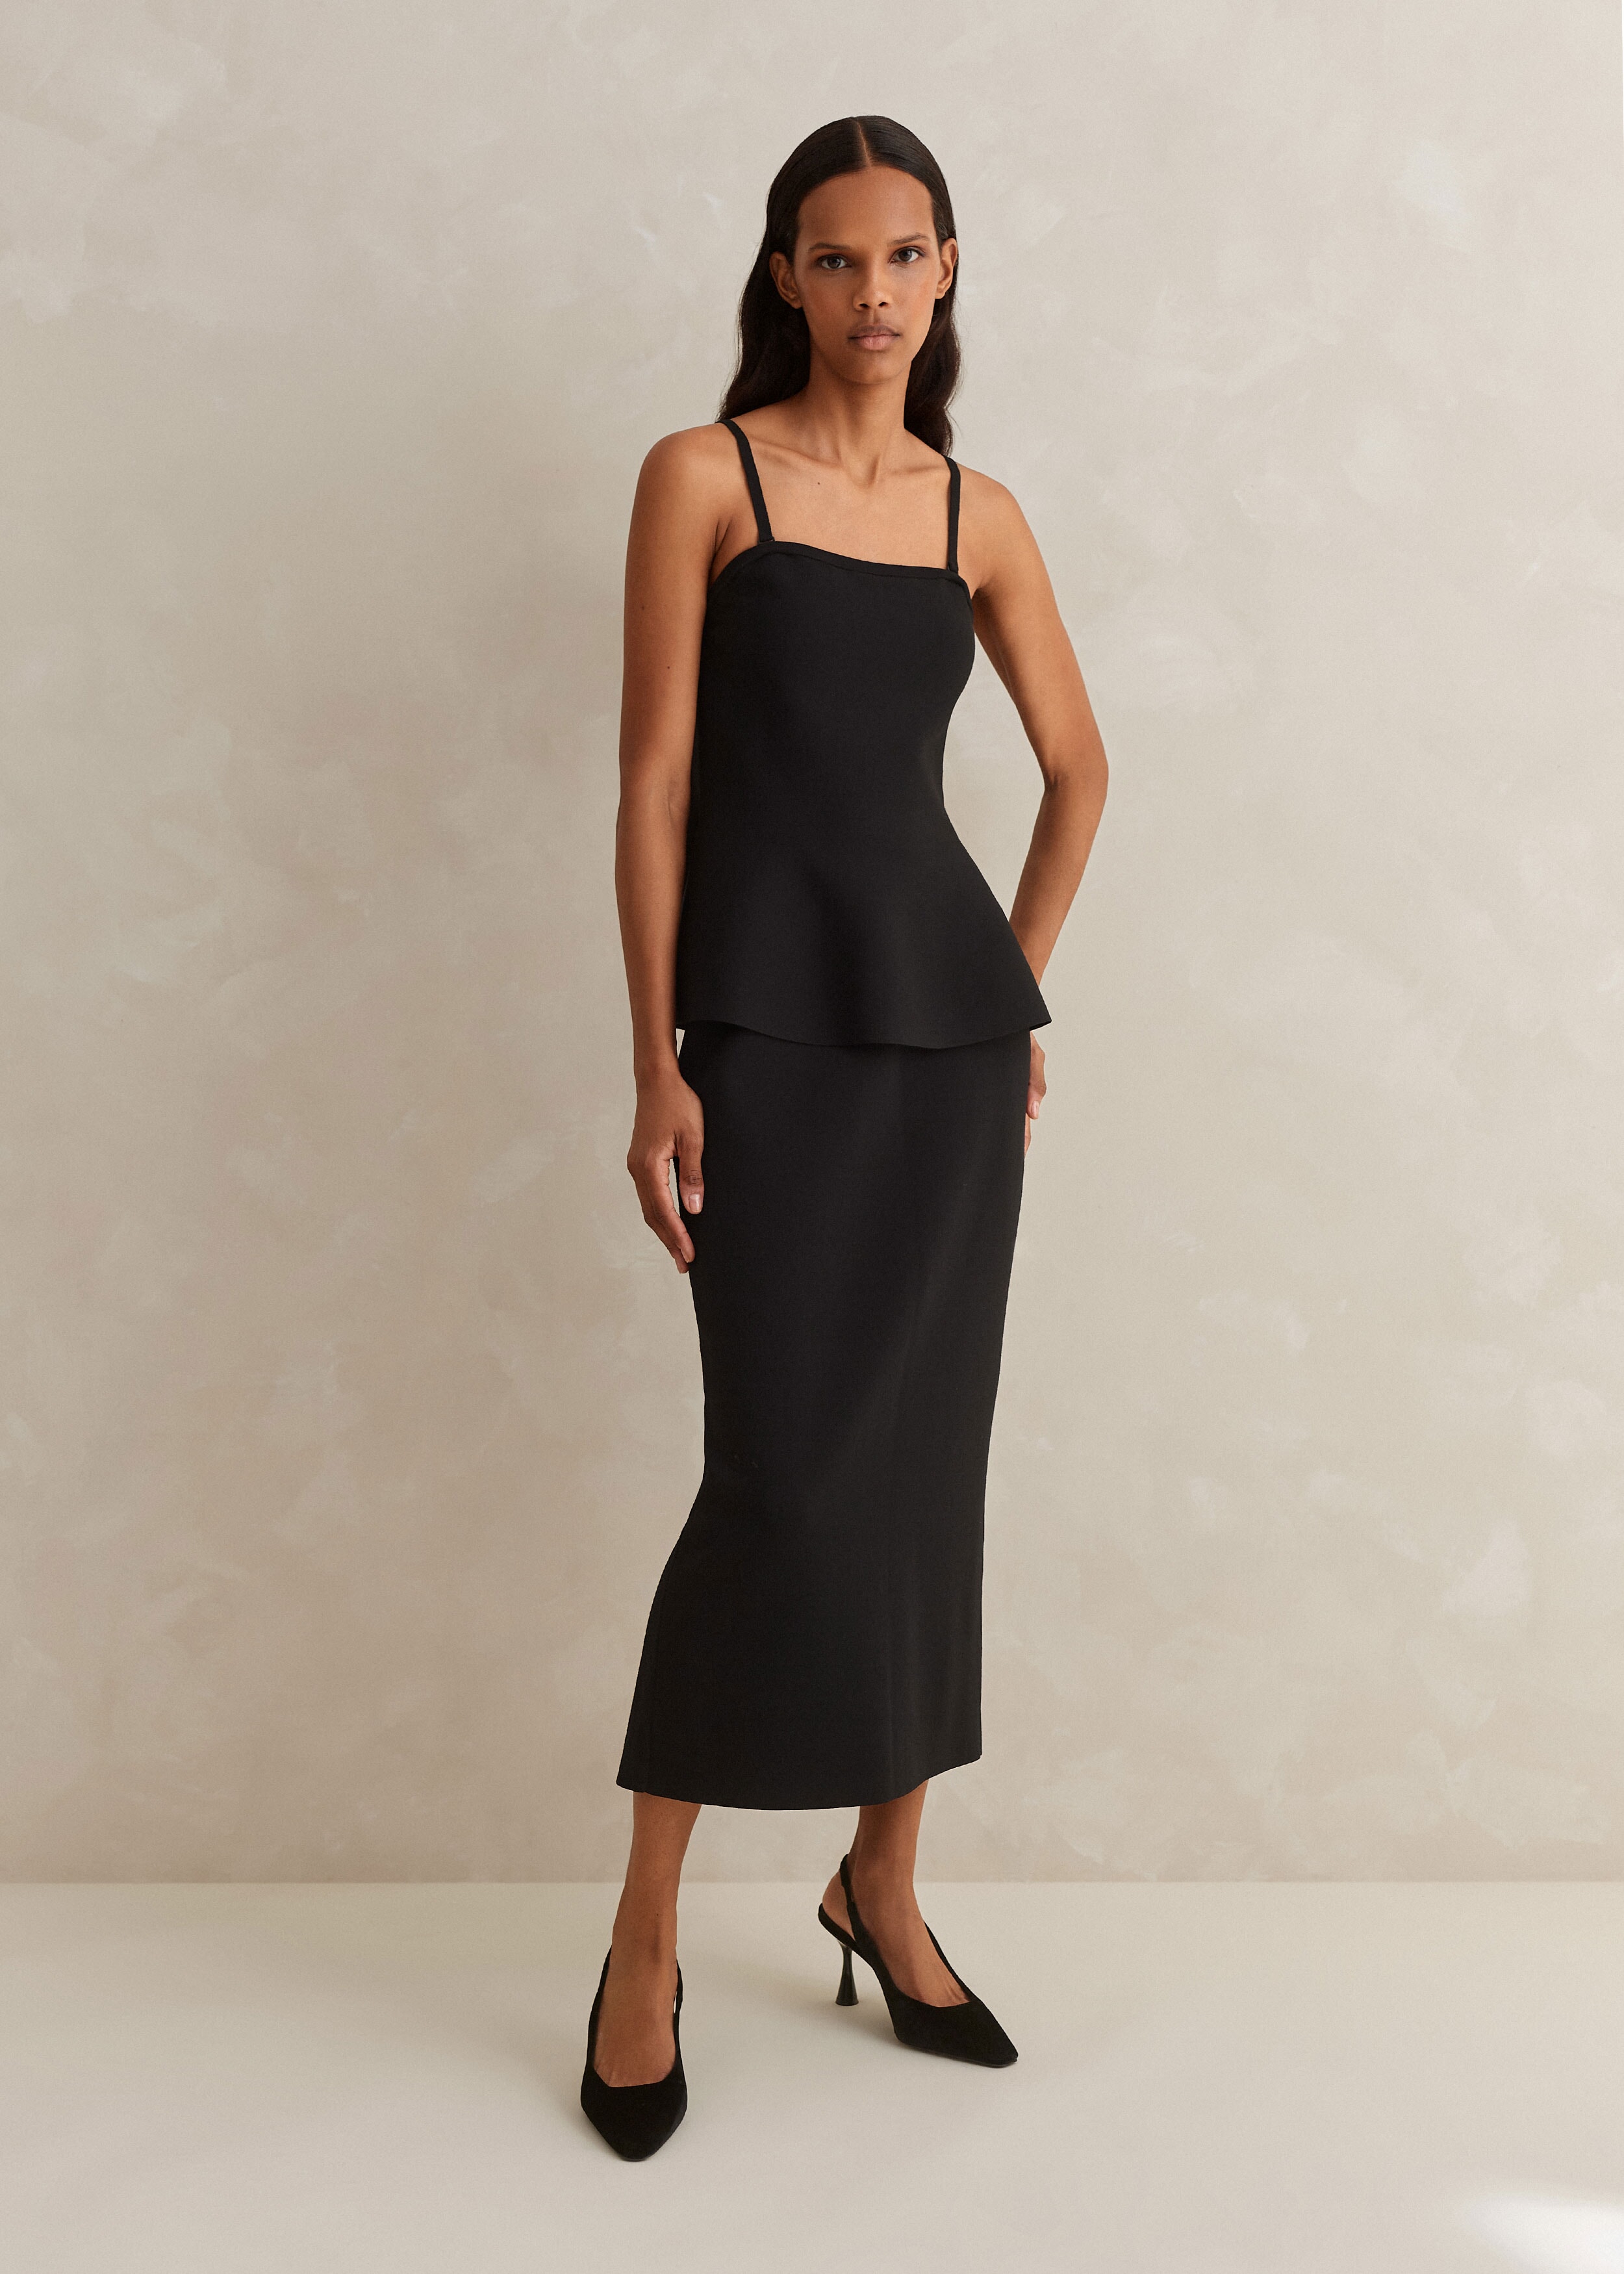 Peplum Top + Skirt Co-ord Black